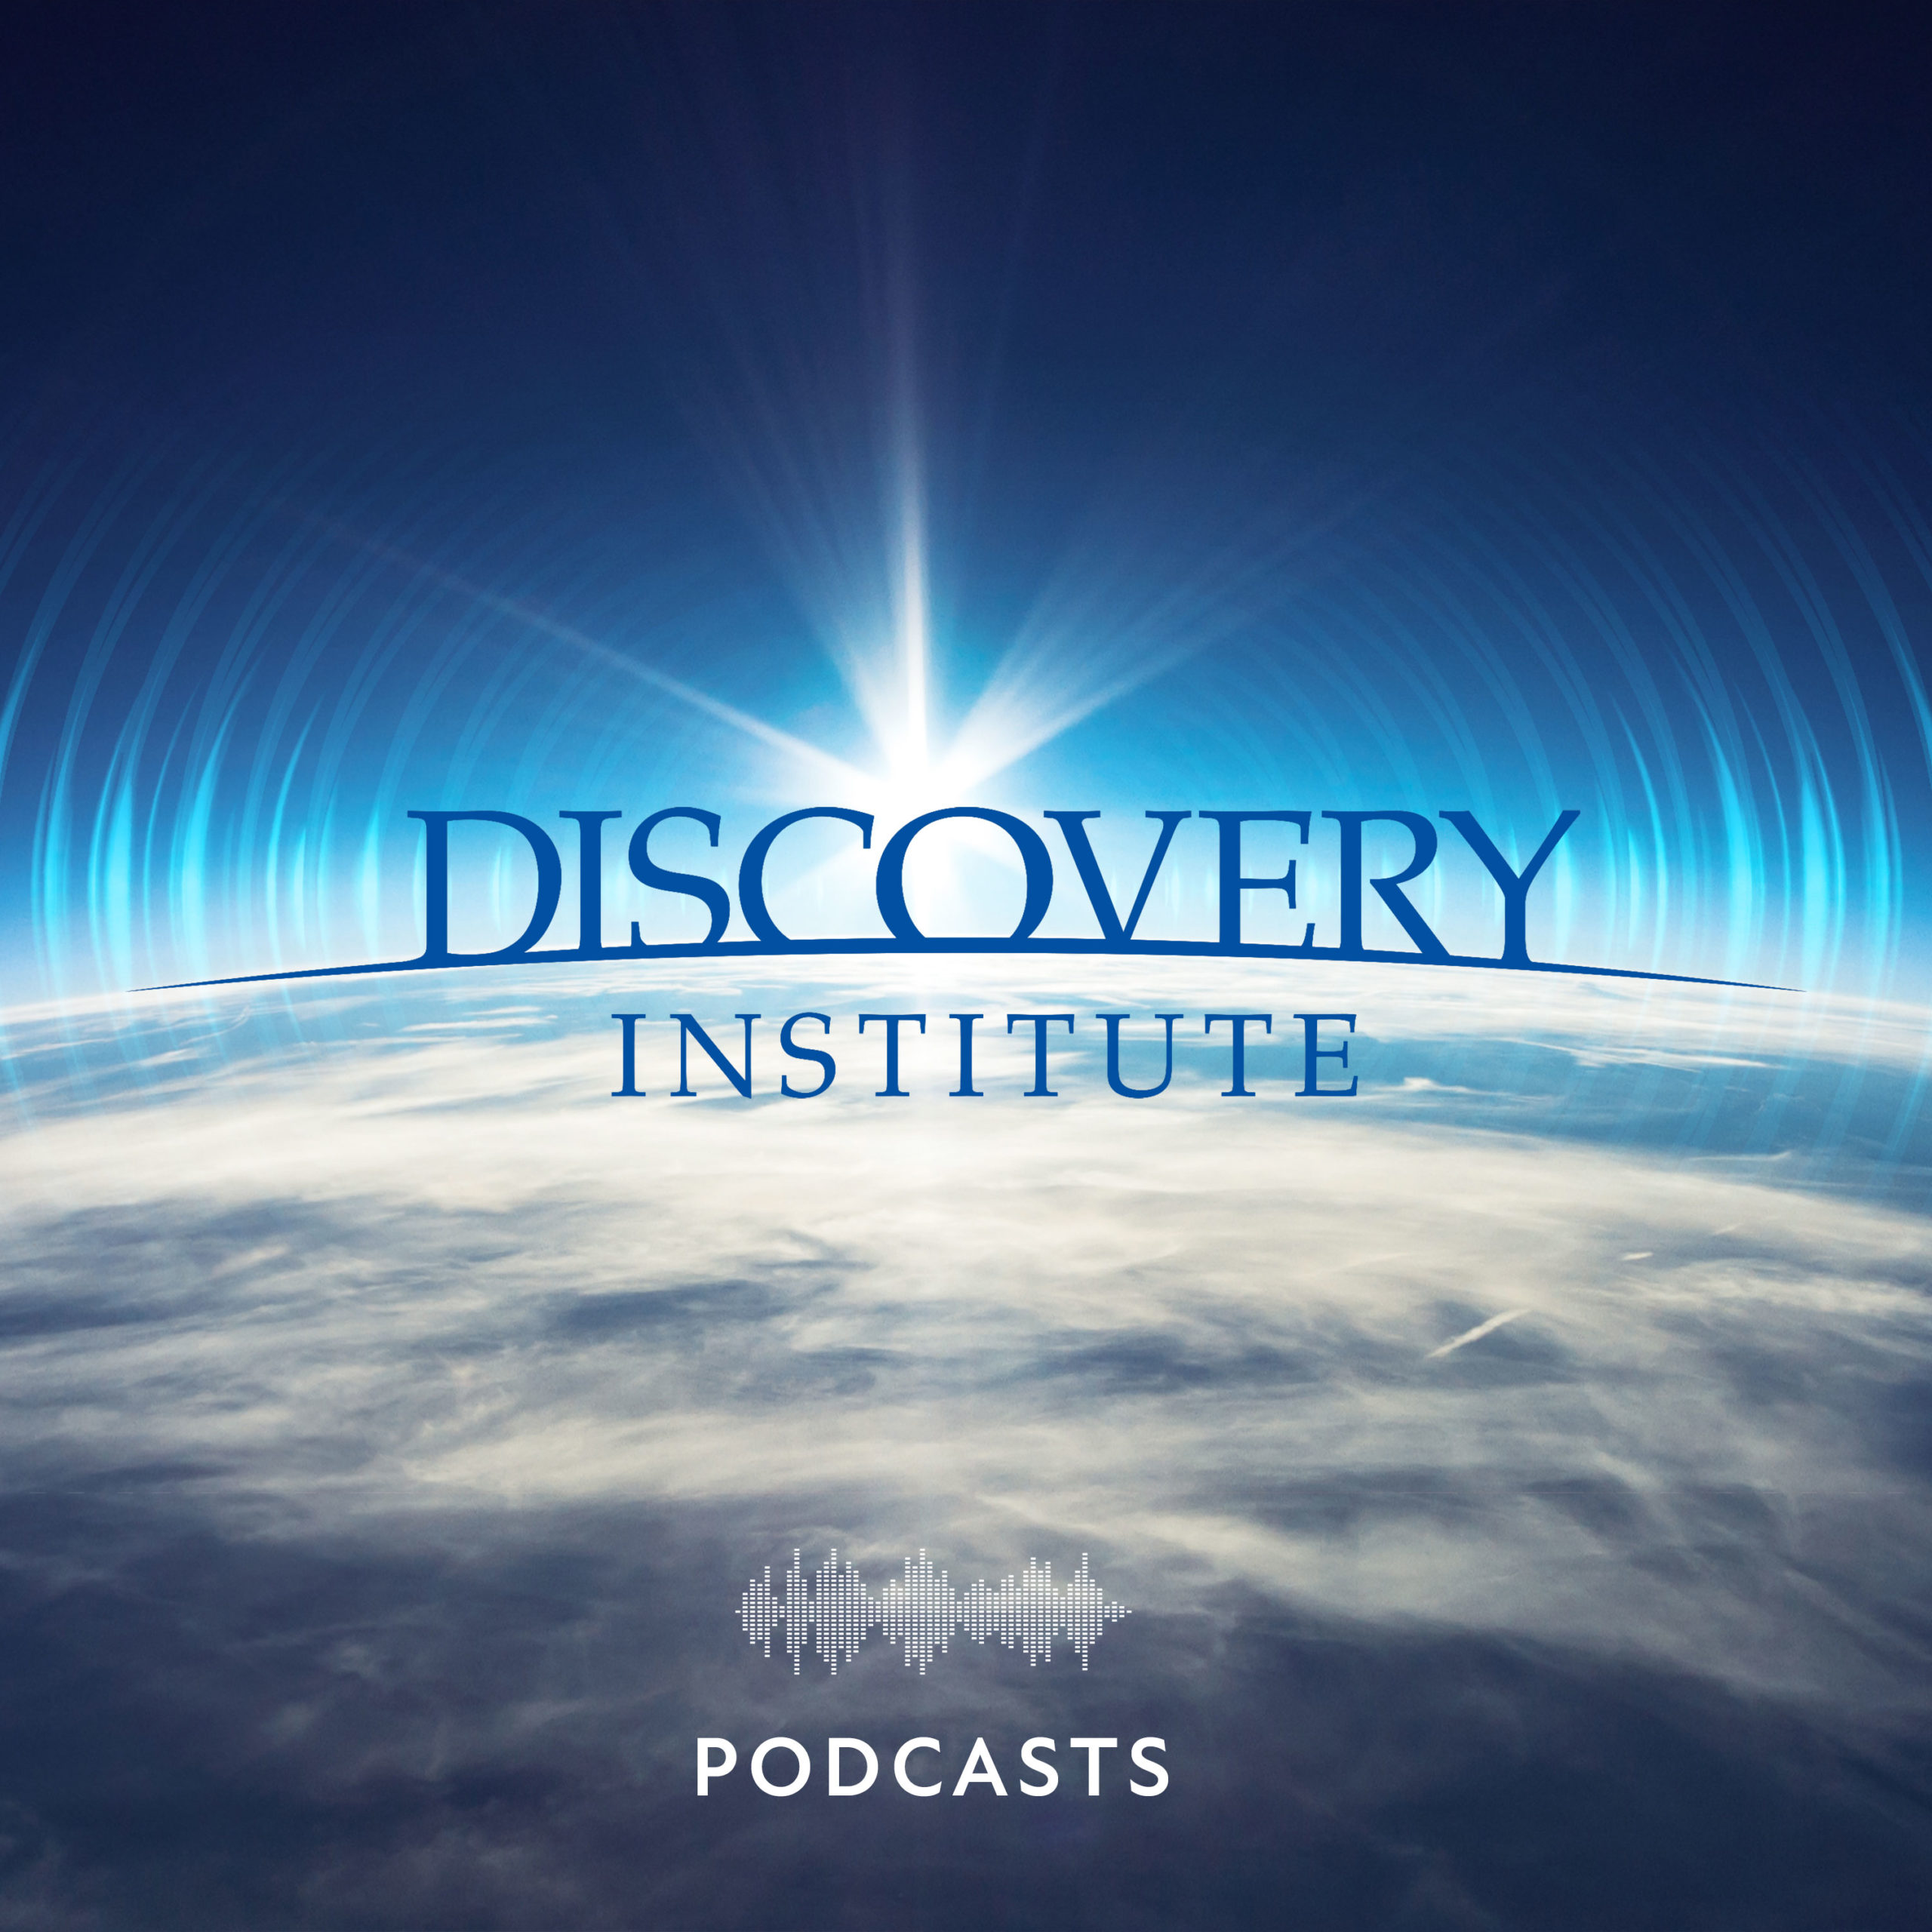 Discovery Institute